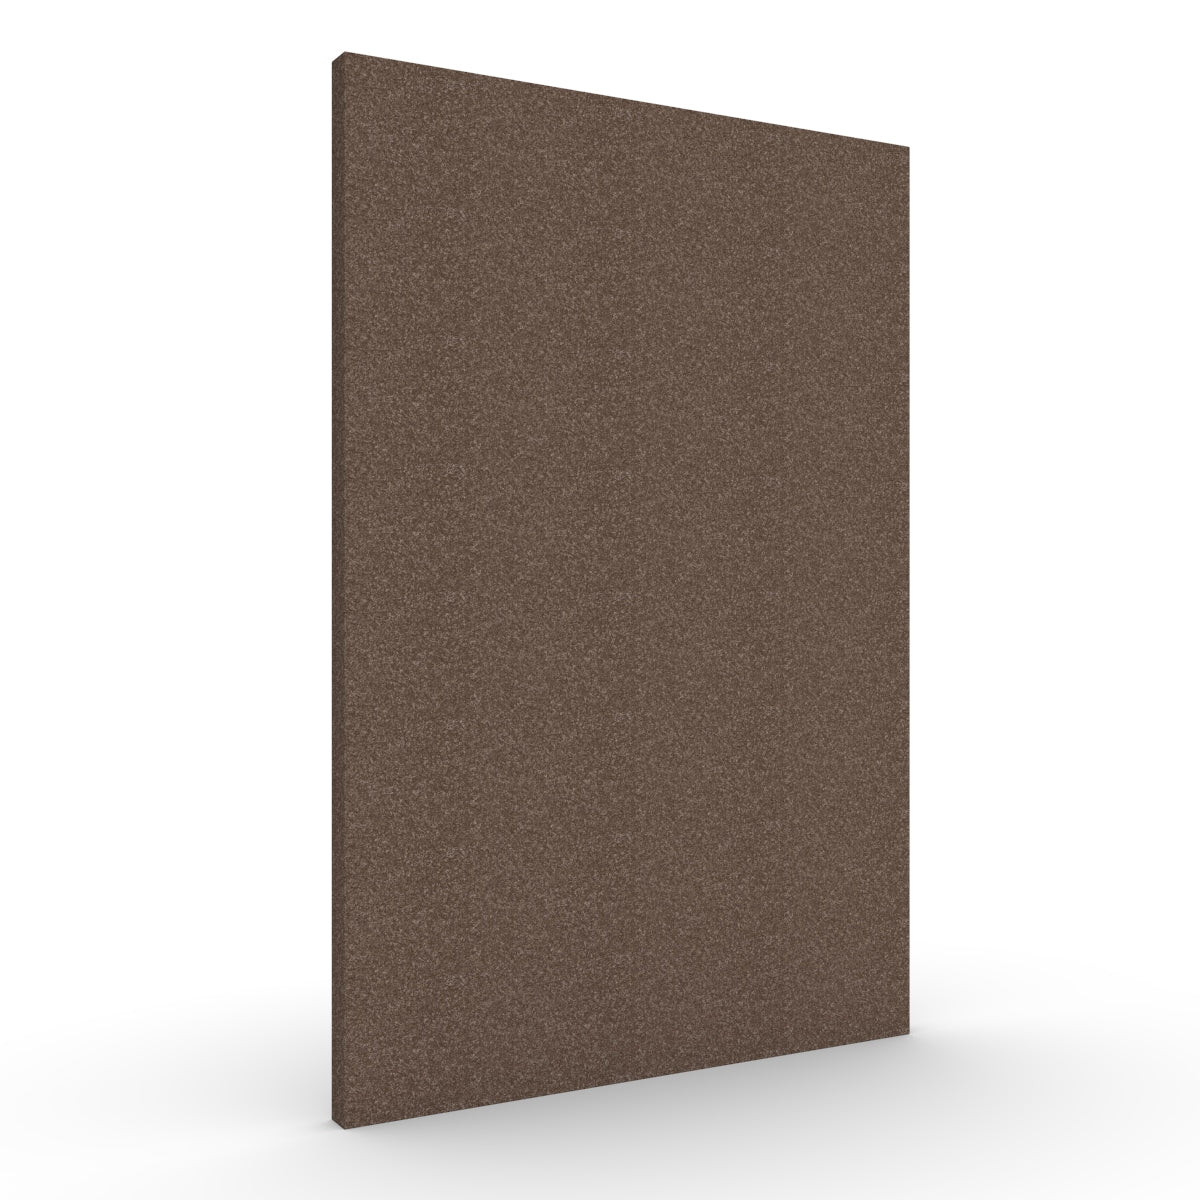 Basic wall sound absorber in brown. Size 166cmx174cm. Akustikkplater og lyddemping vegg